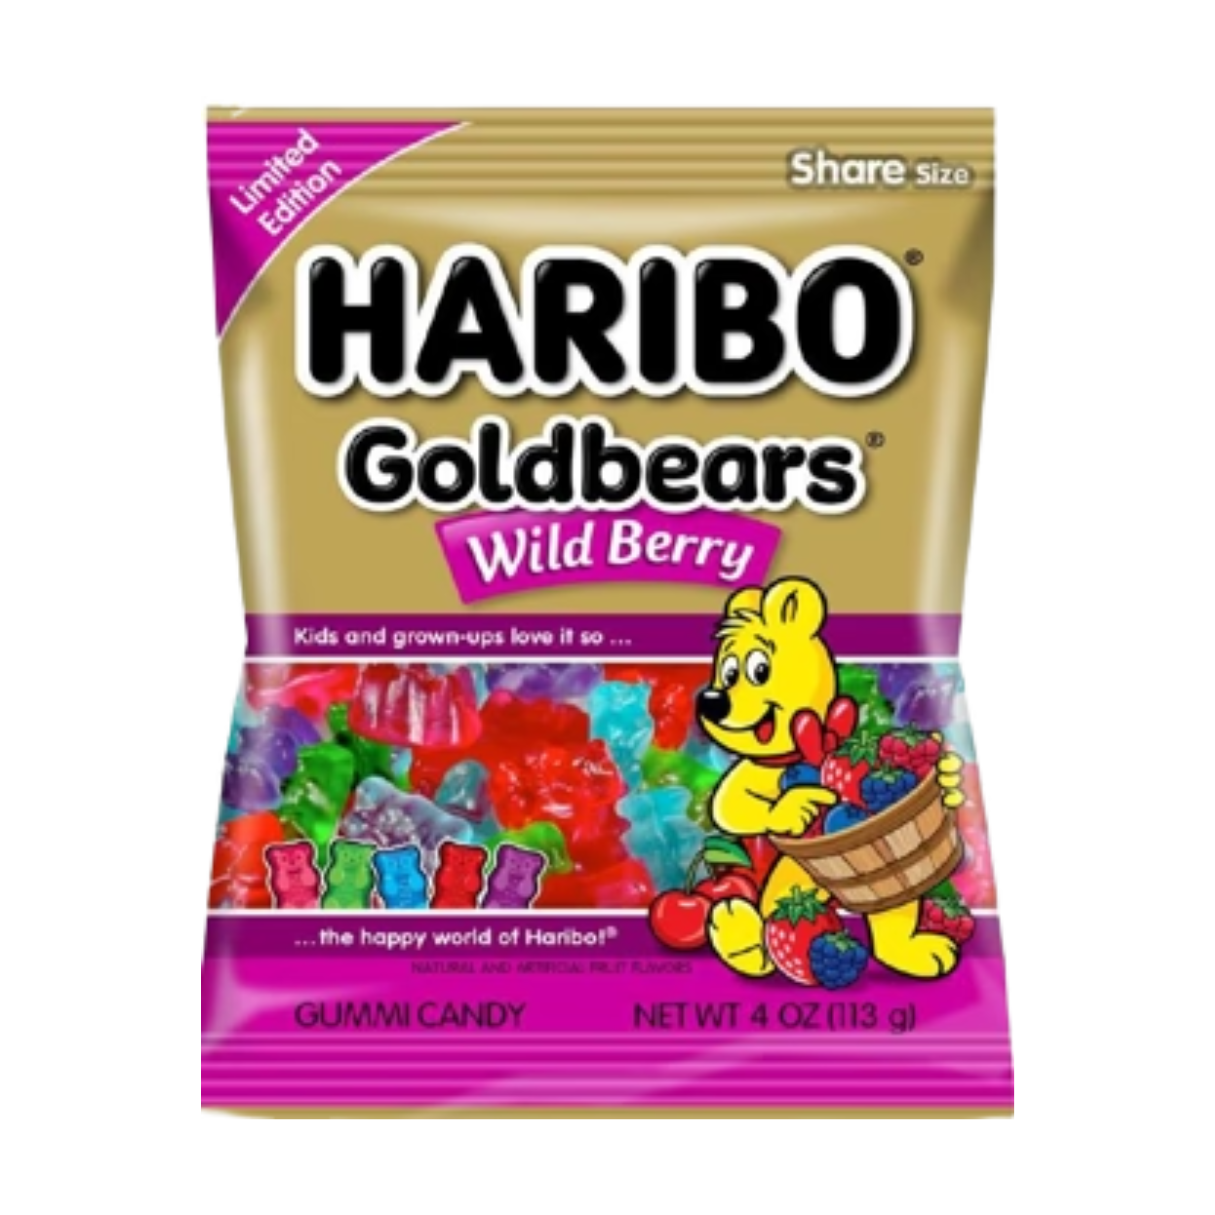 Haribo Wild Berry Gold Bears Gummi Candy 4oz - 12ct